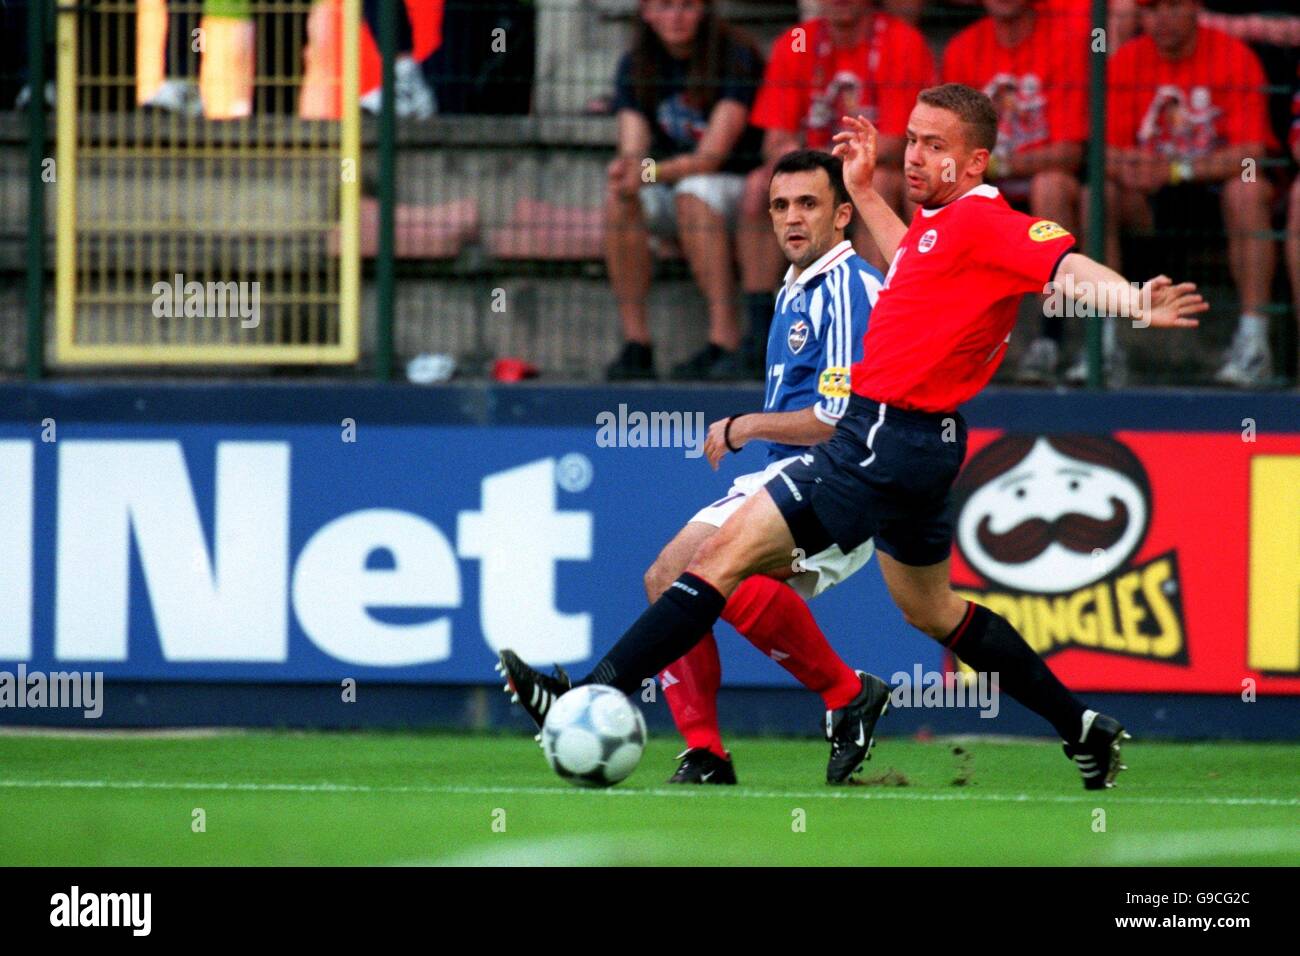 Soccer - Euro 2000 - Group C - Norway v Yugoslavia. Norway's Veggard Heggem tries to keep the ball in play, as Yugoslavia's Ljubinko Drulovic looks on Stock Photo